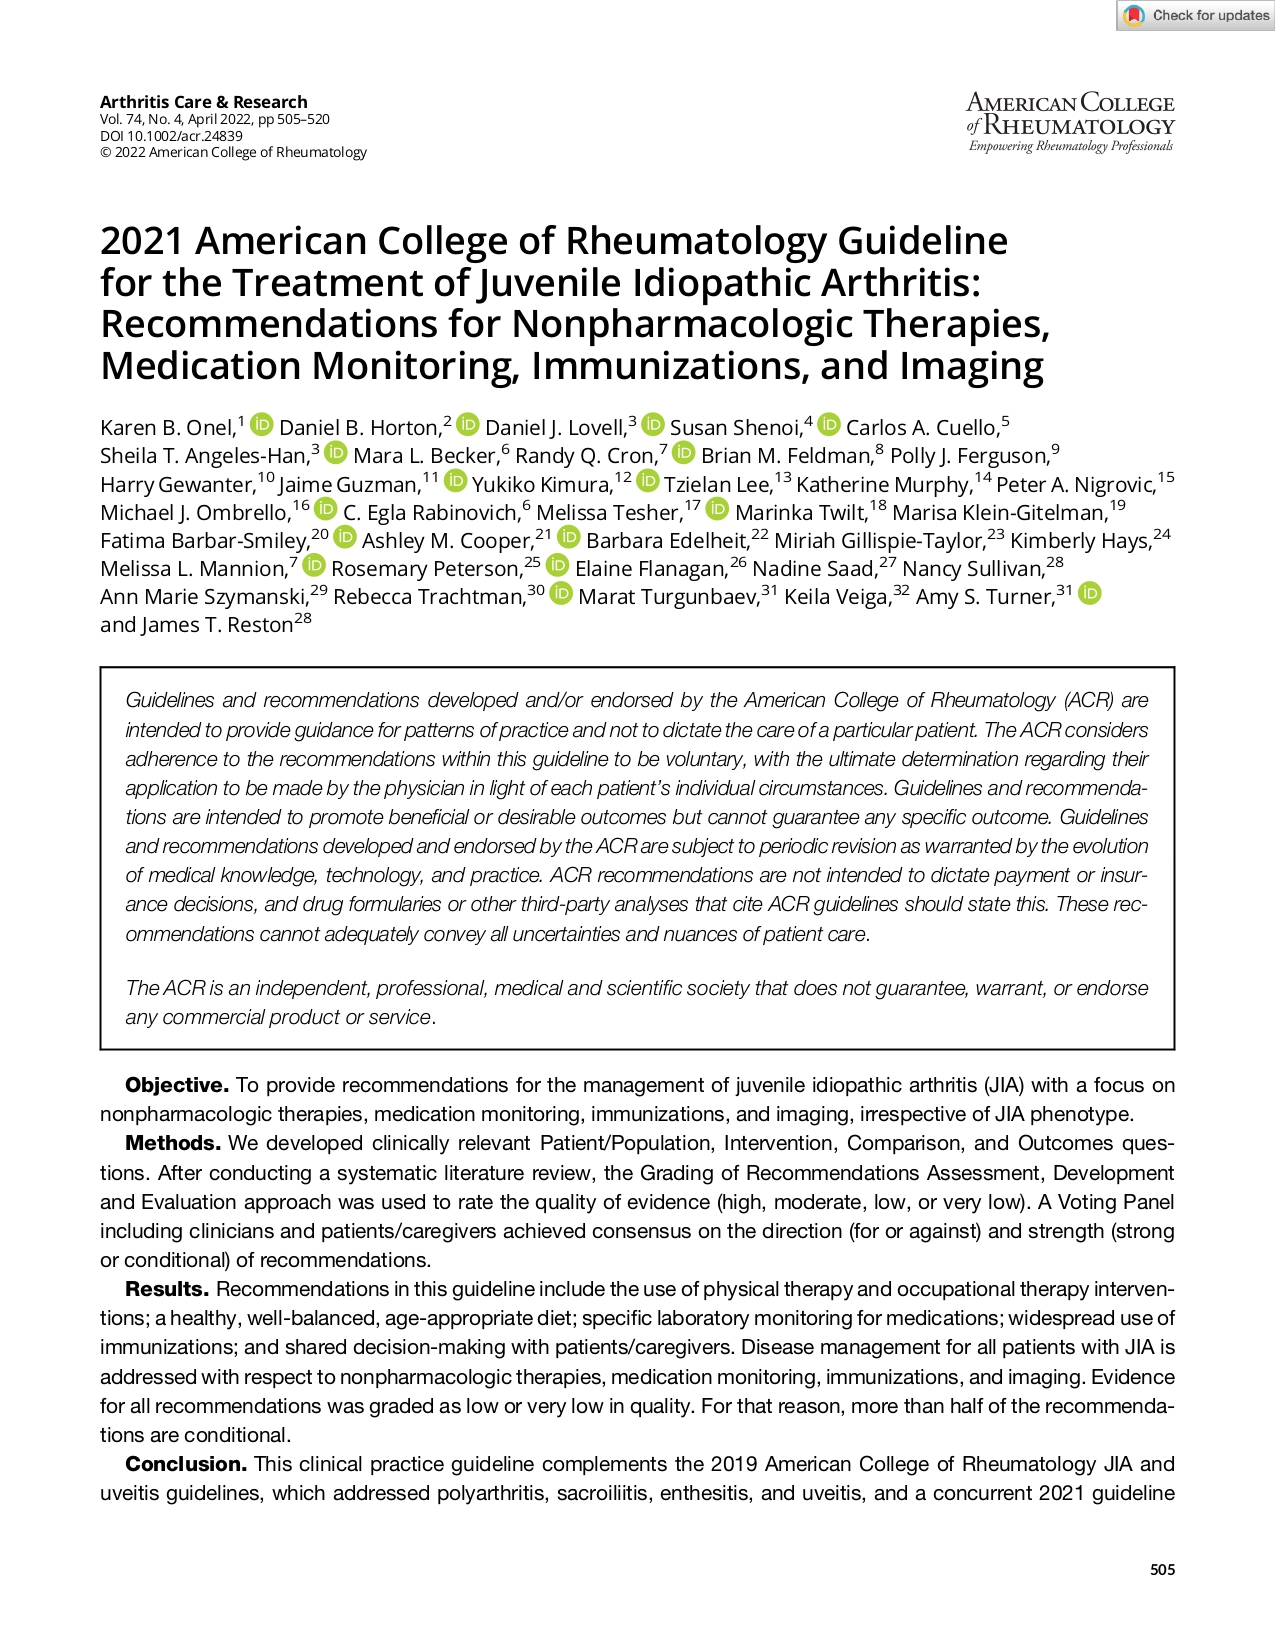 2021 JIA Nonpharmacologic, Medication Monitoring, Immunizations, and Imaging Guideline (ACR 2021)